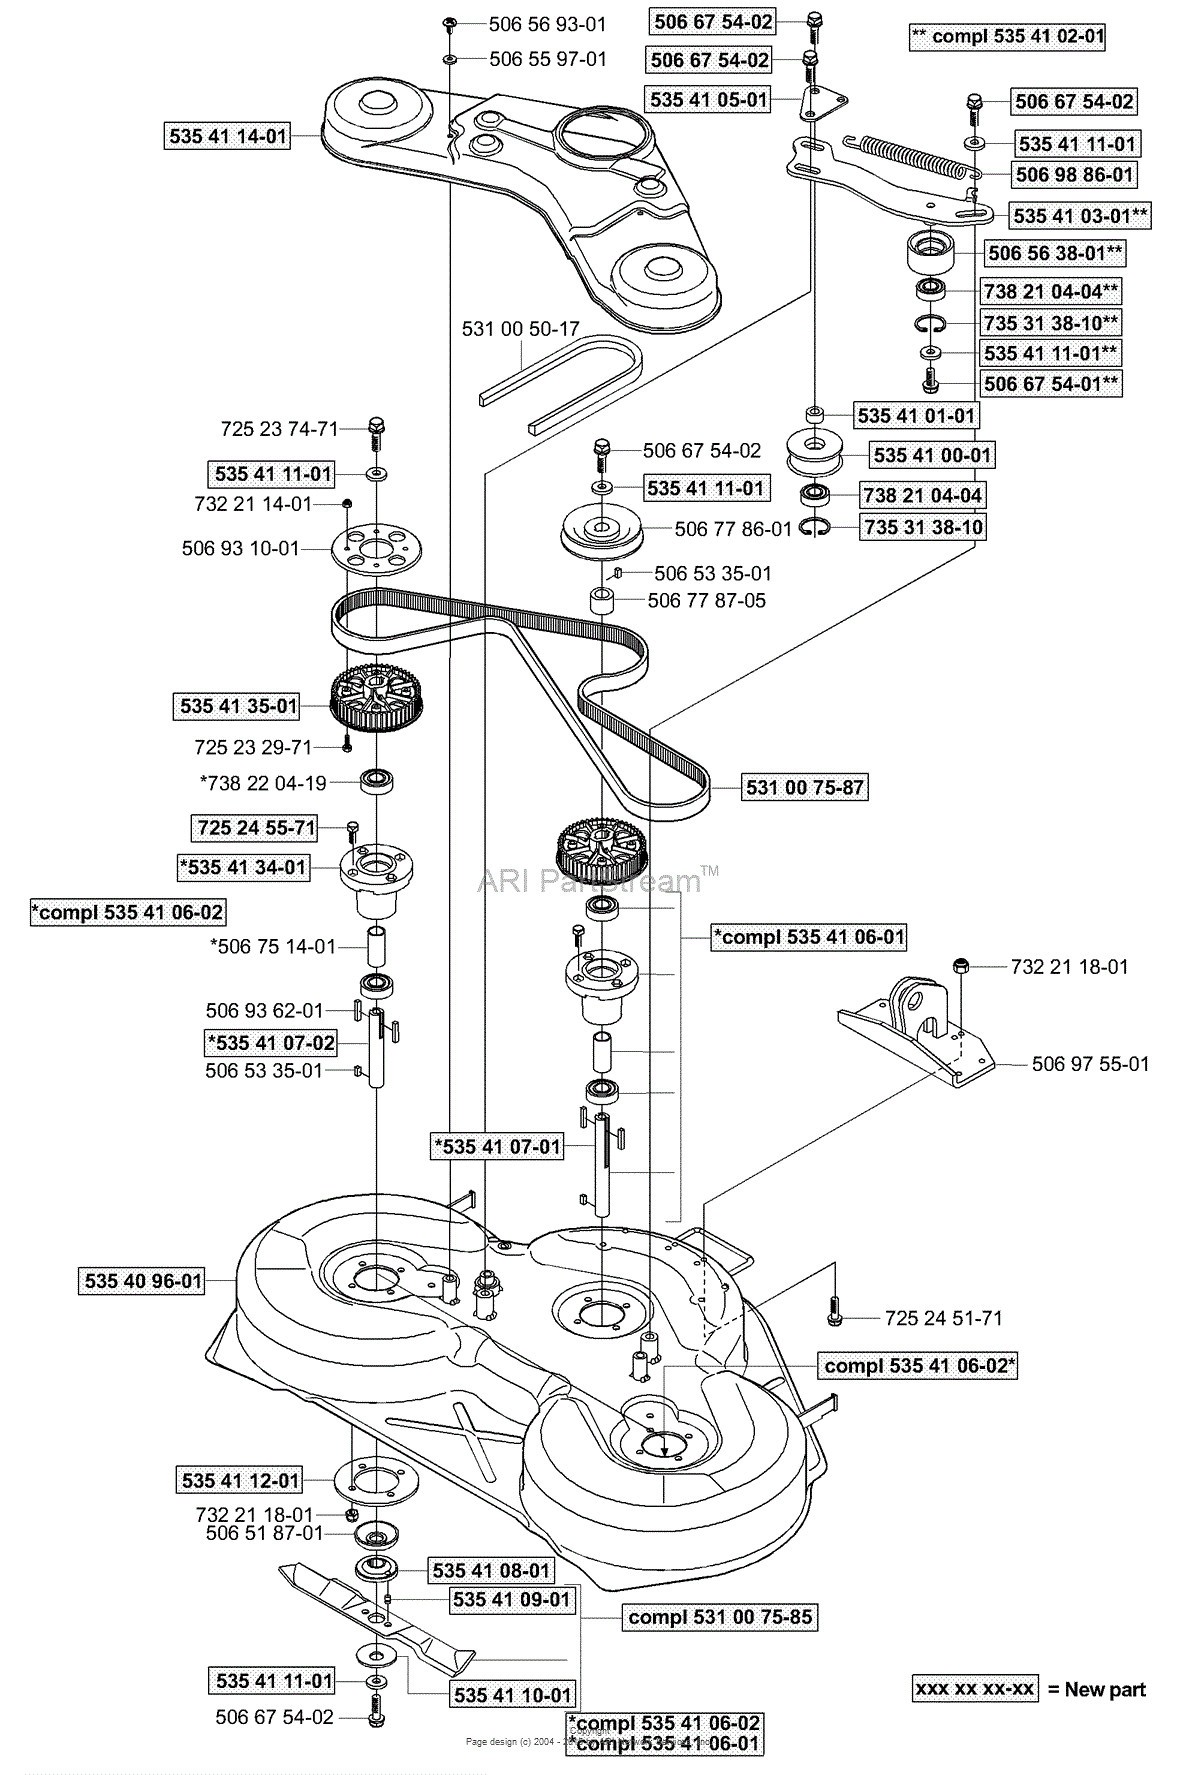 Electrolux 2100 Parts Diagram | My Wiring DIagram 2001 vw passat wiring diagrams 